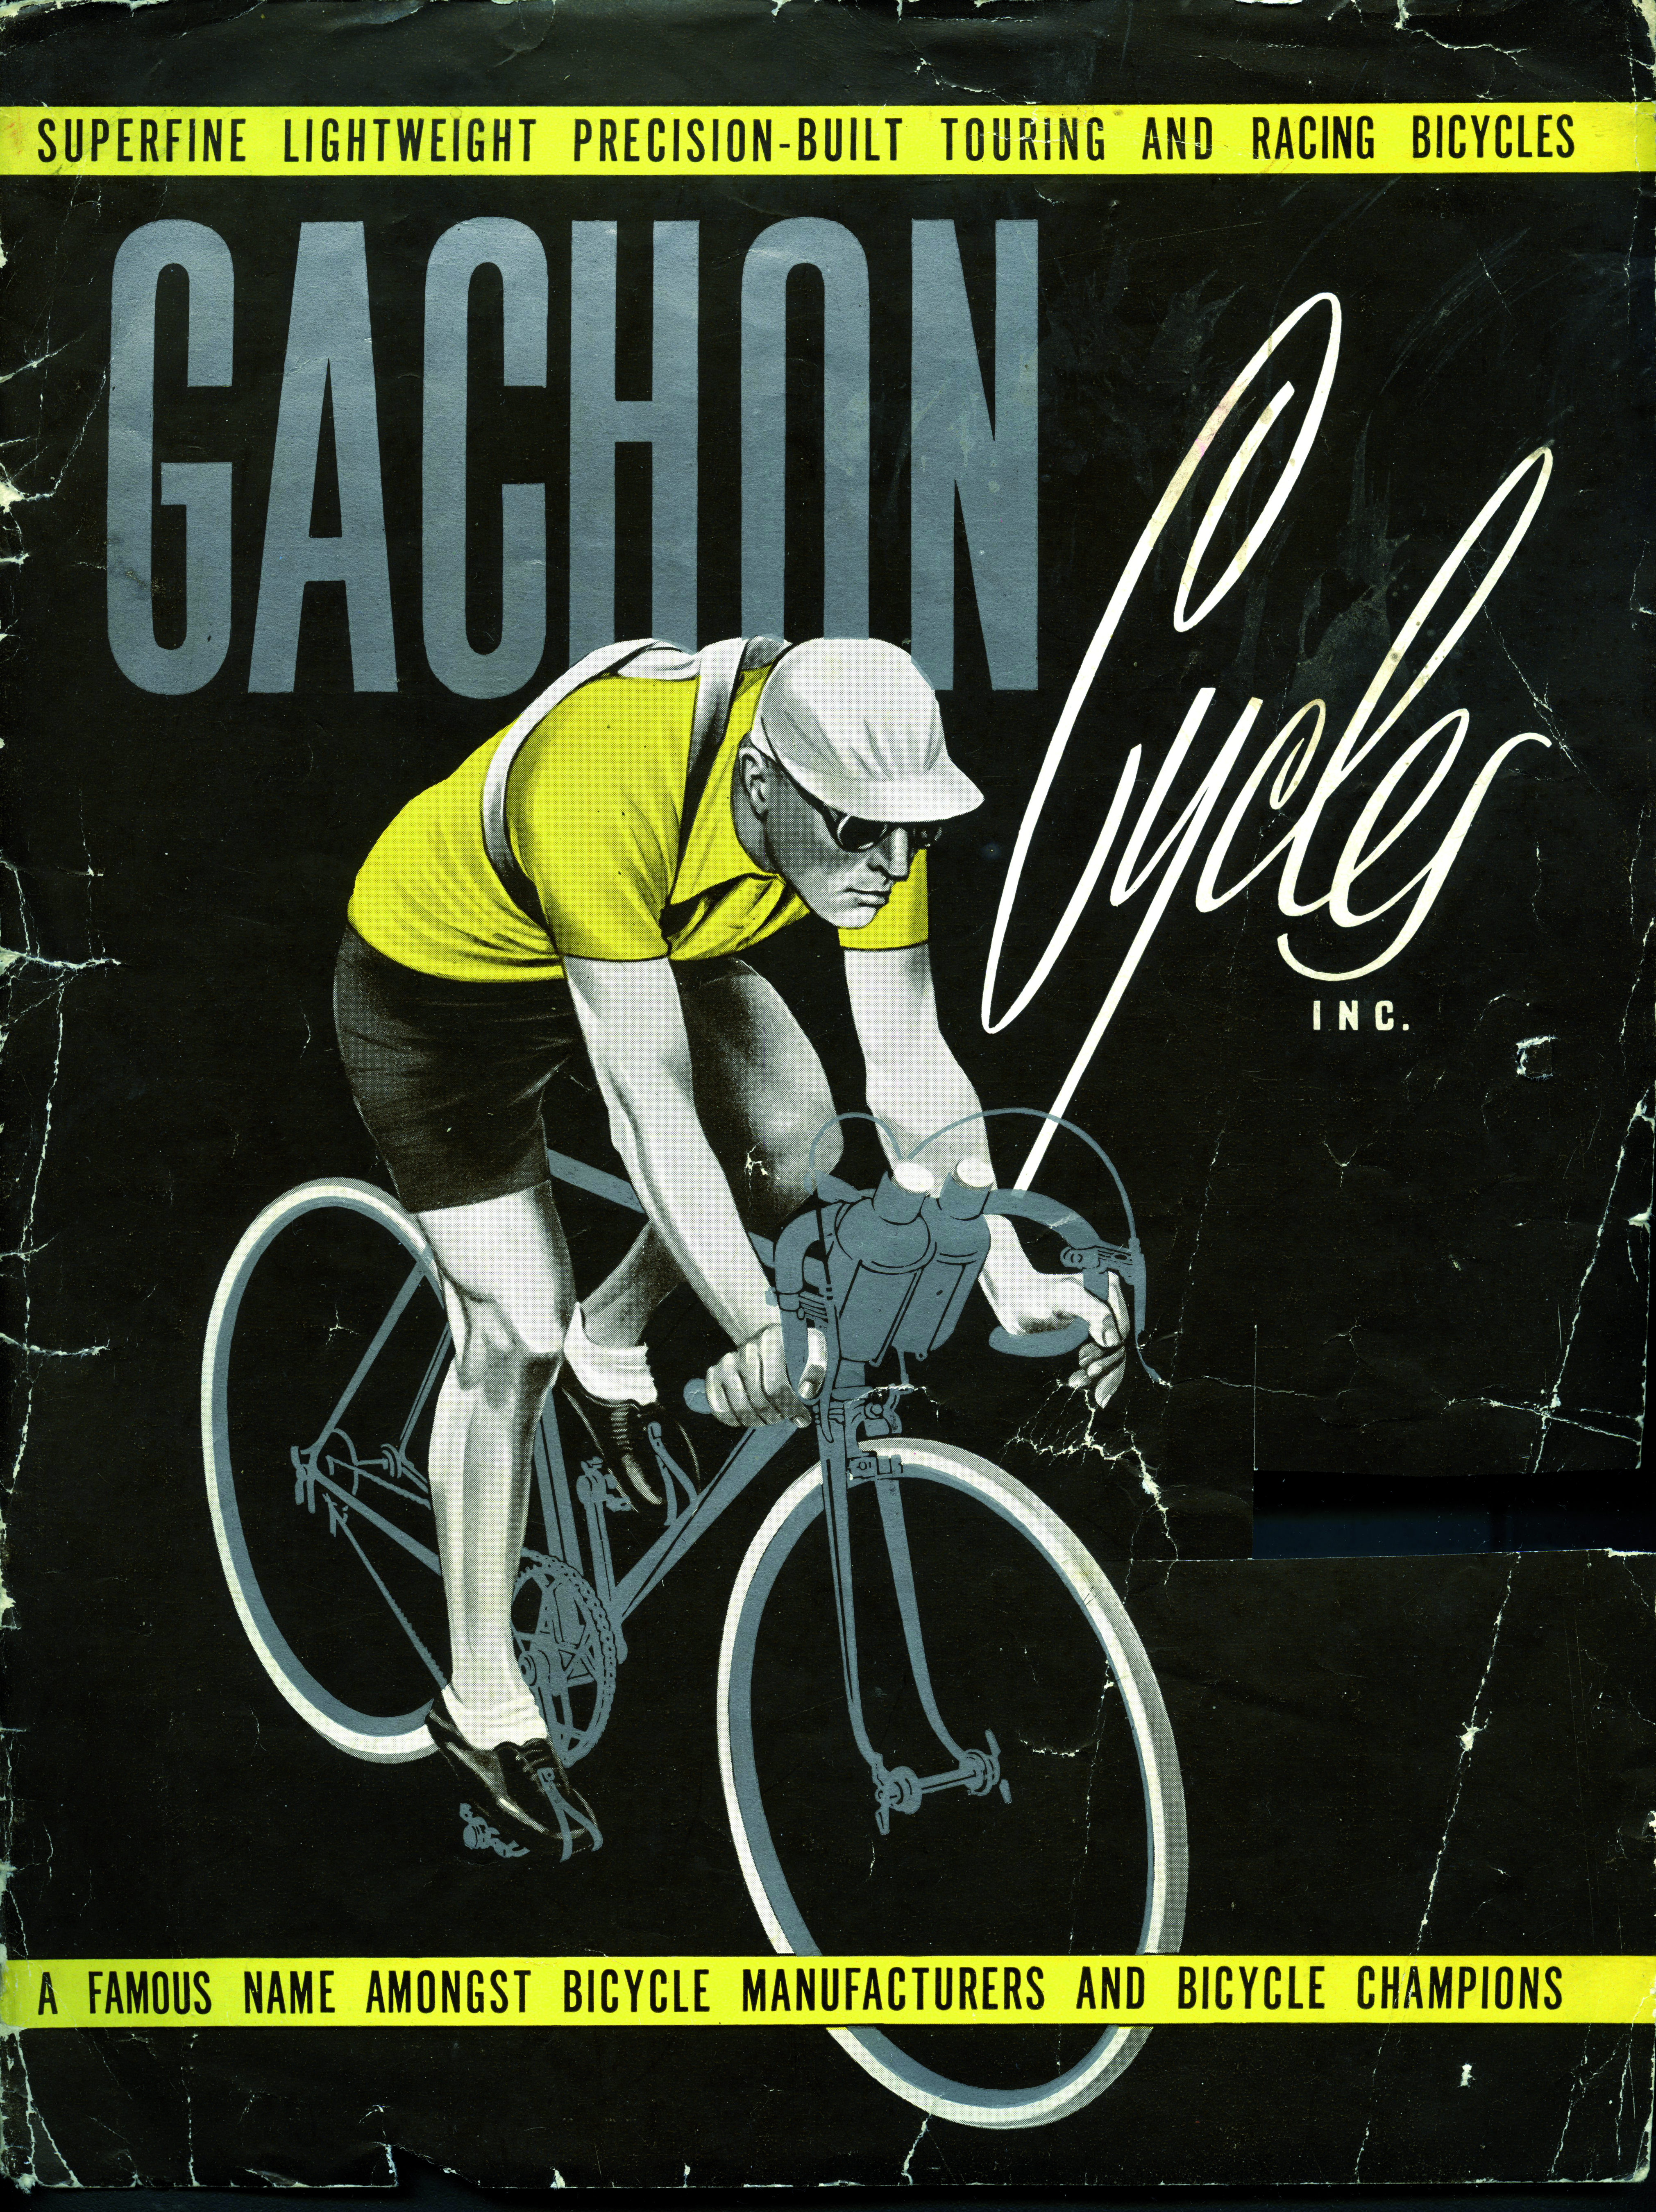 Gachon Cycle